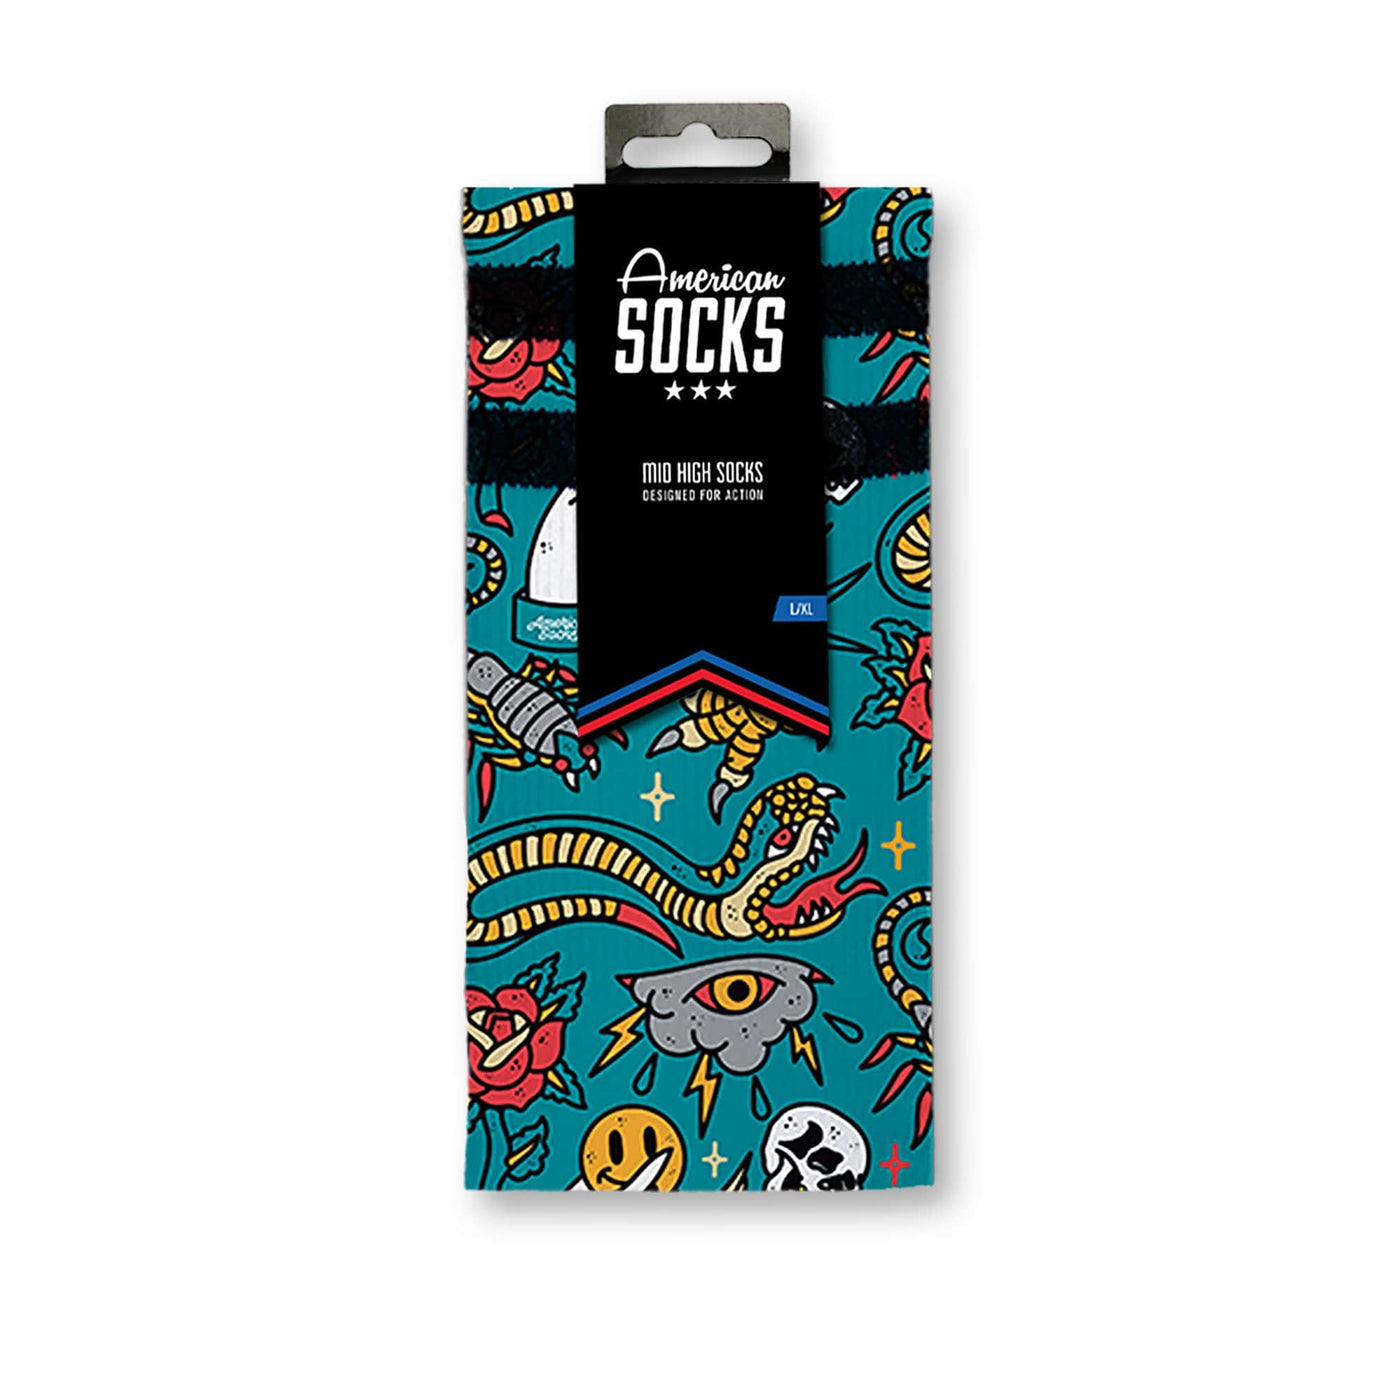 American Socks Tattoo Collection - Gift Box